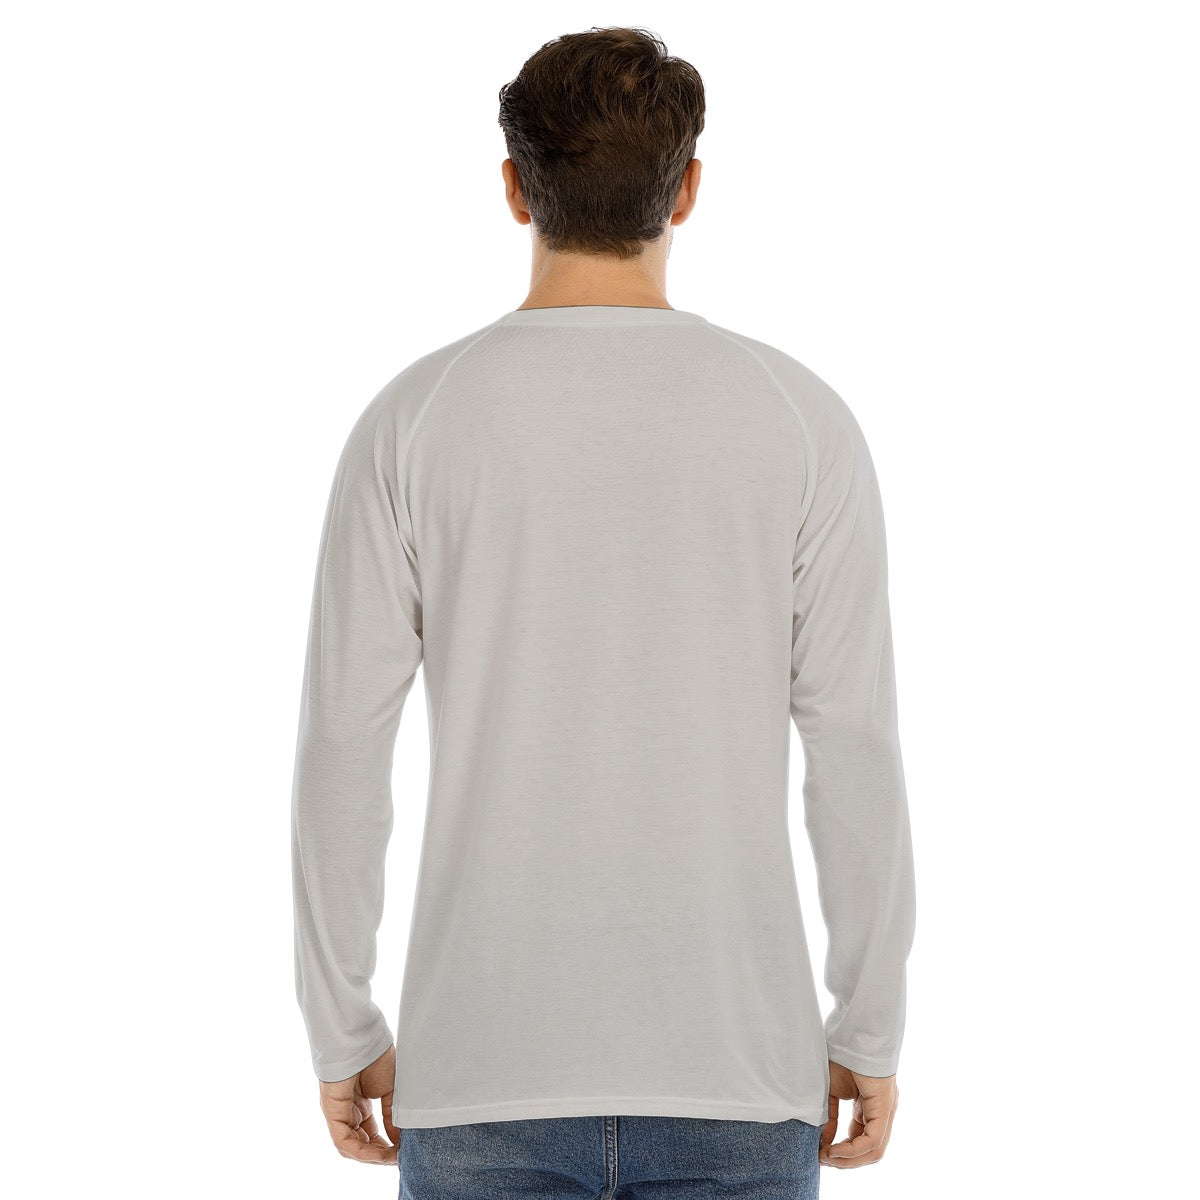 Leaves 101 -- Men's Long Sleeve T-shirt With Raglan Sleeve